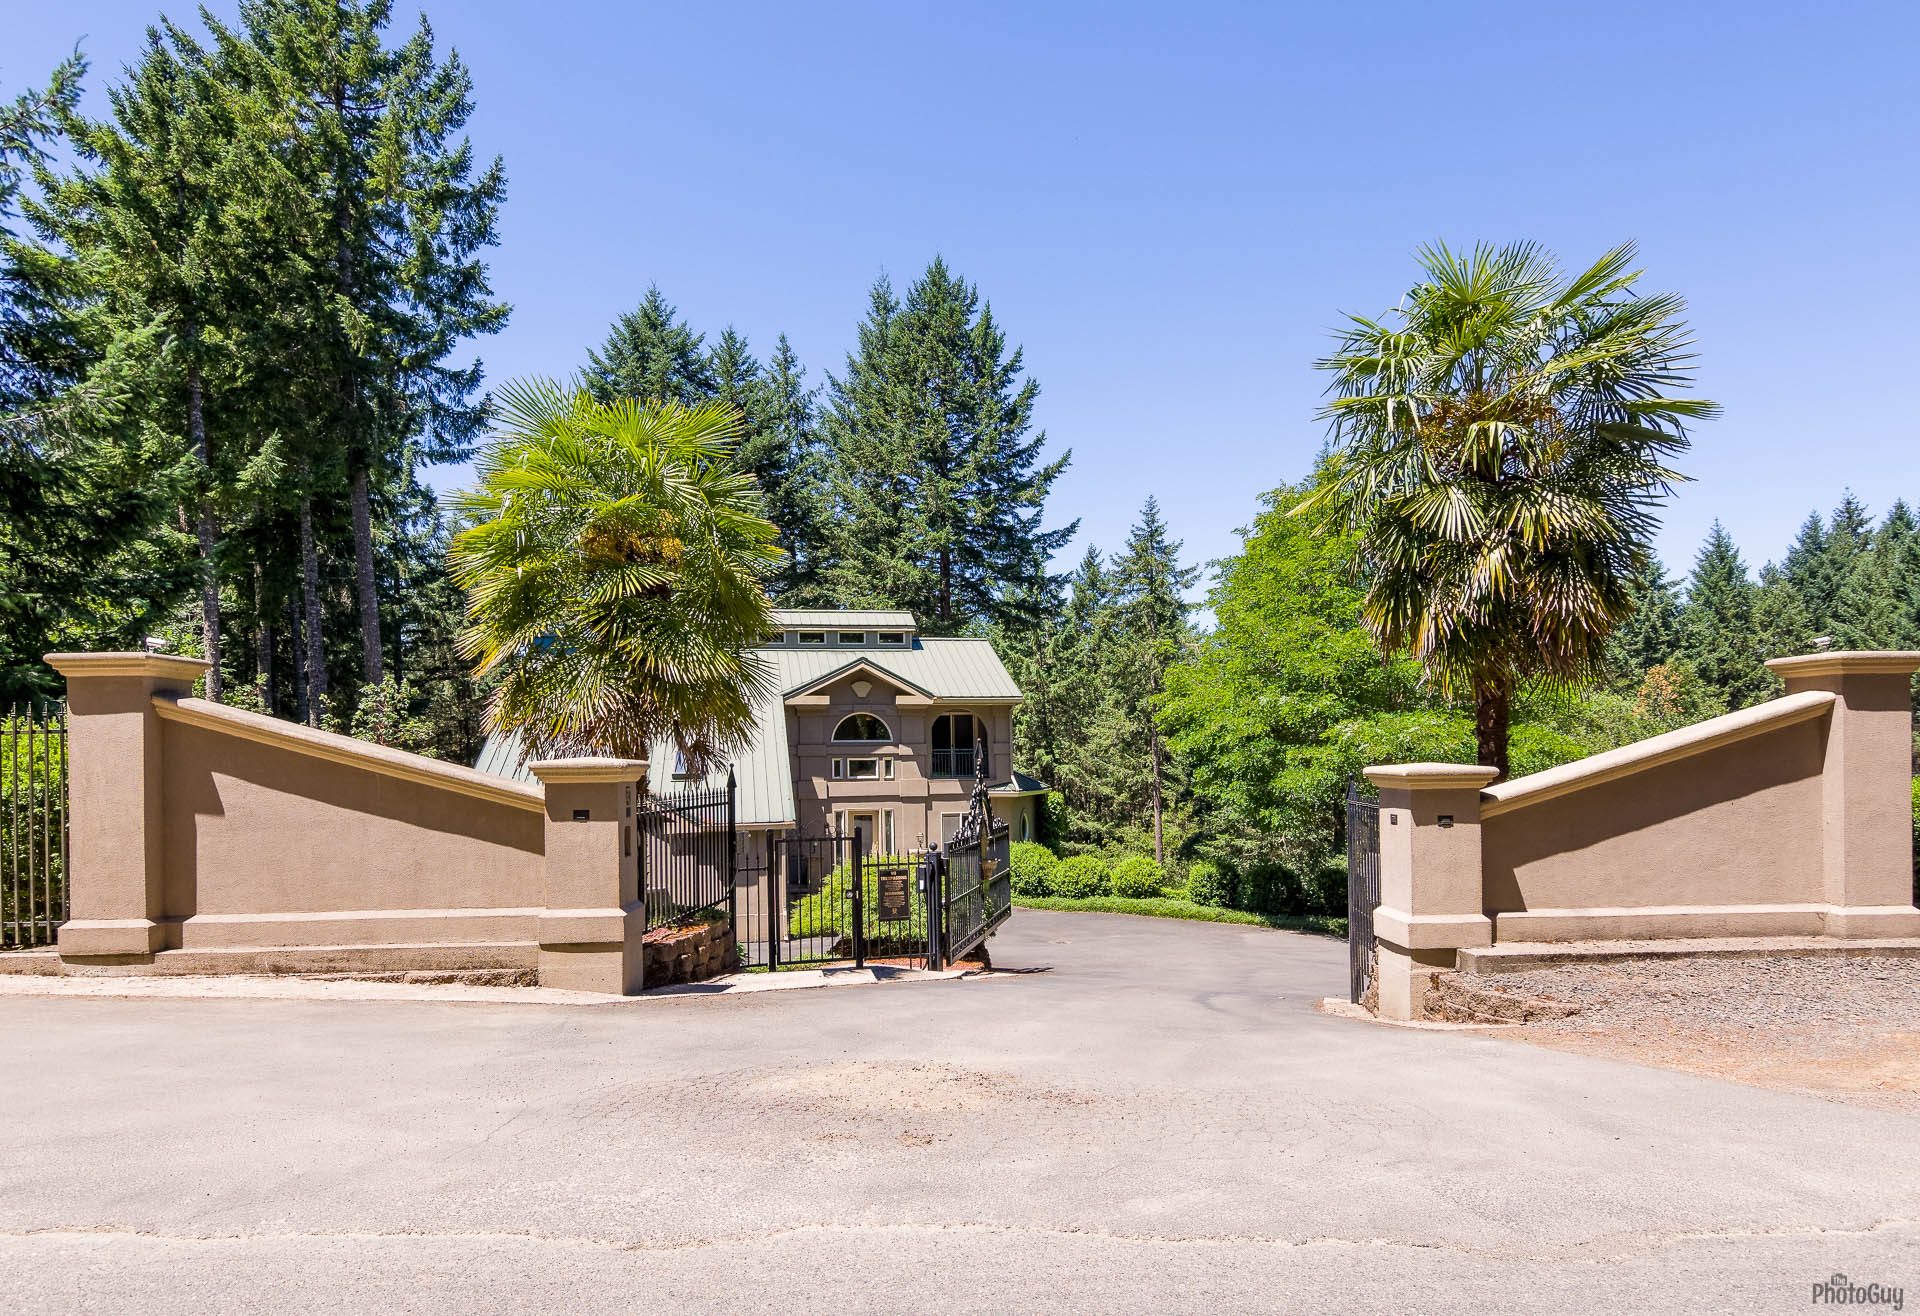 Villa Ingenieux - Oregon Luxury Home for Sale